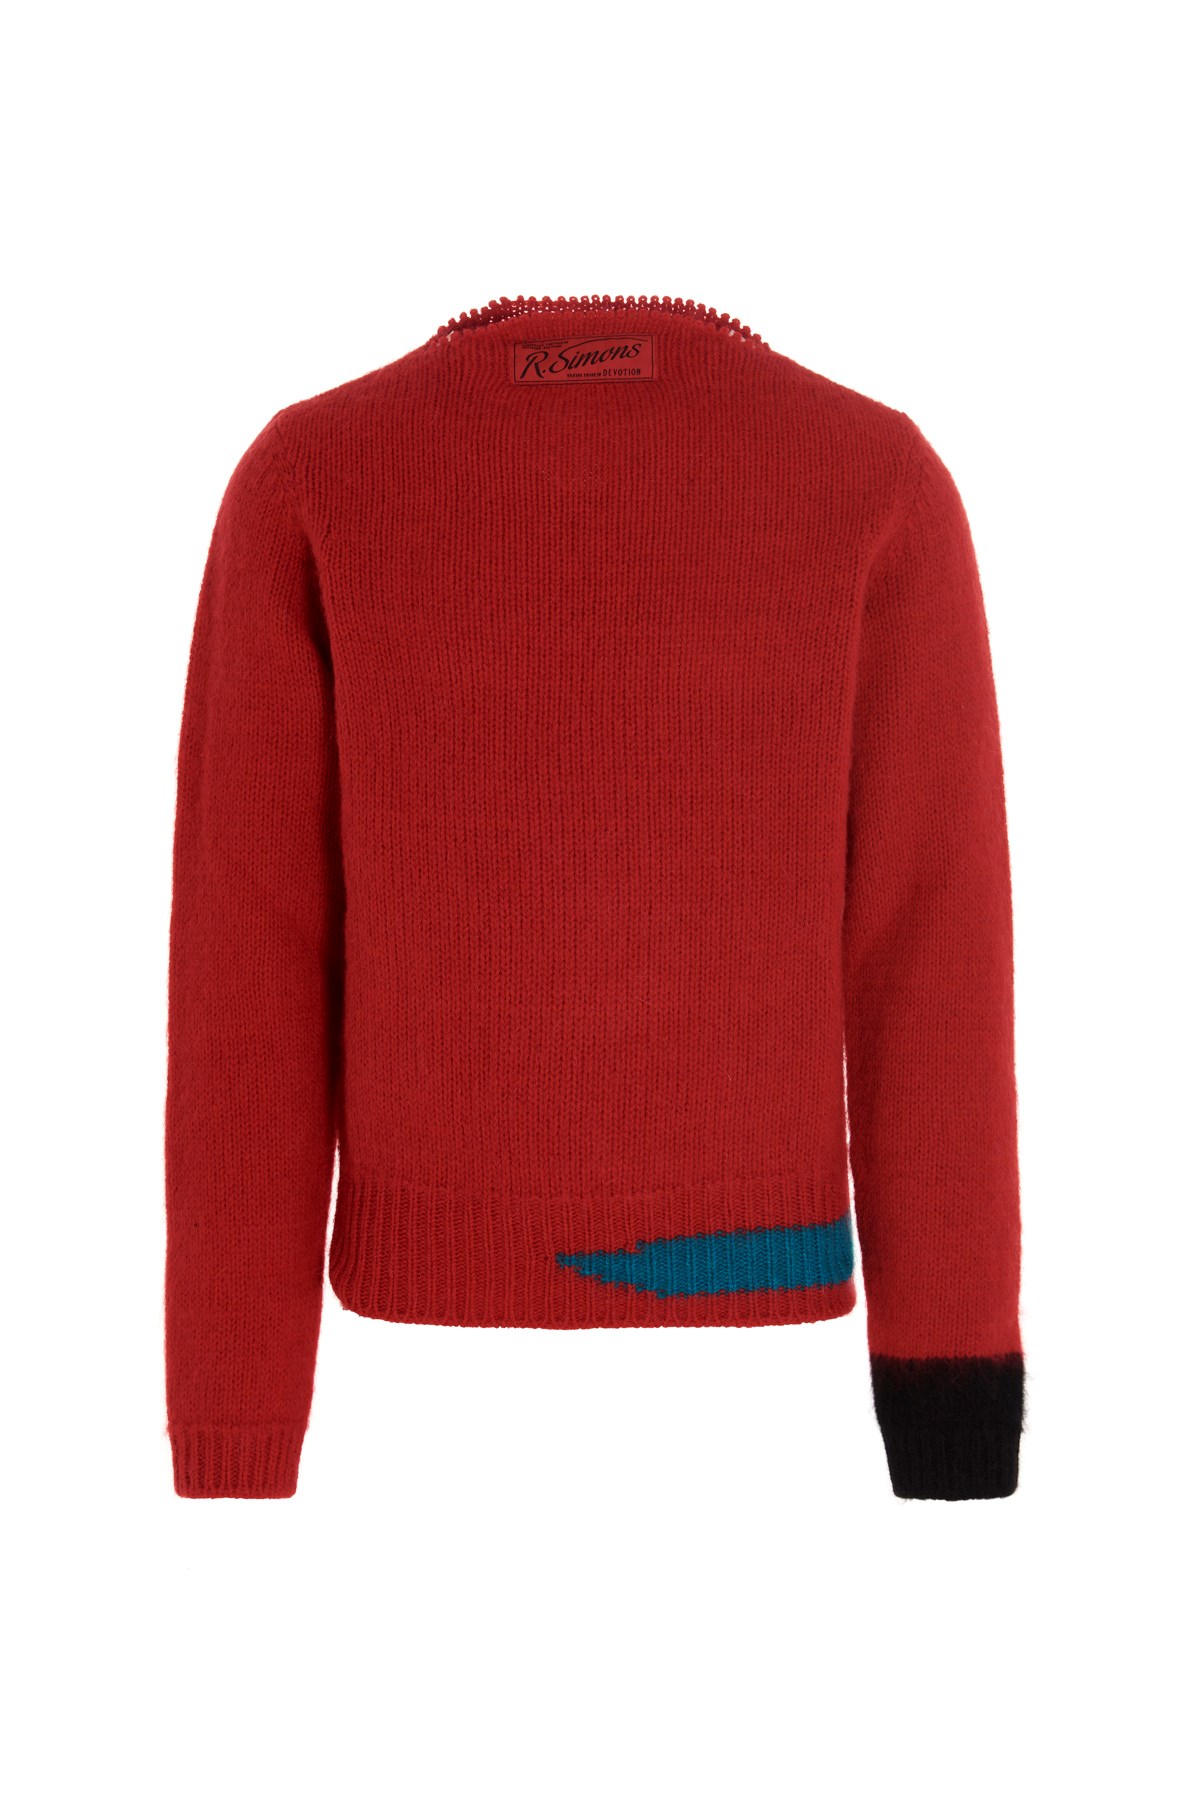 RAF SIMONS 'Vintage’ Sweater